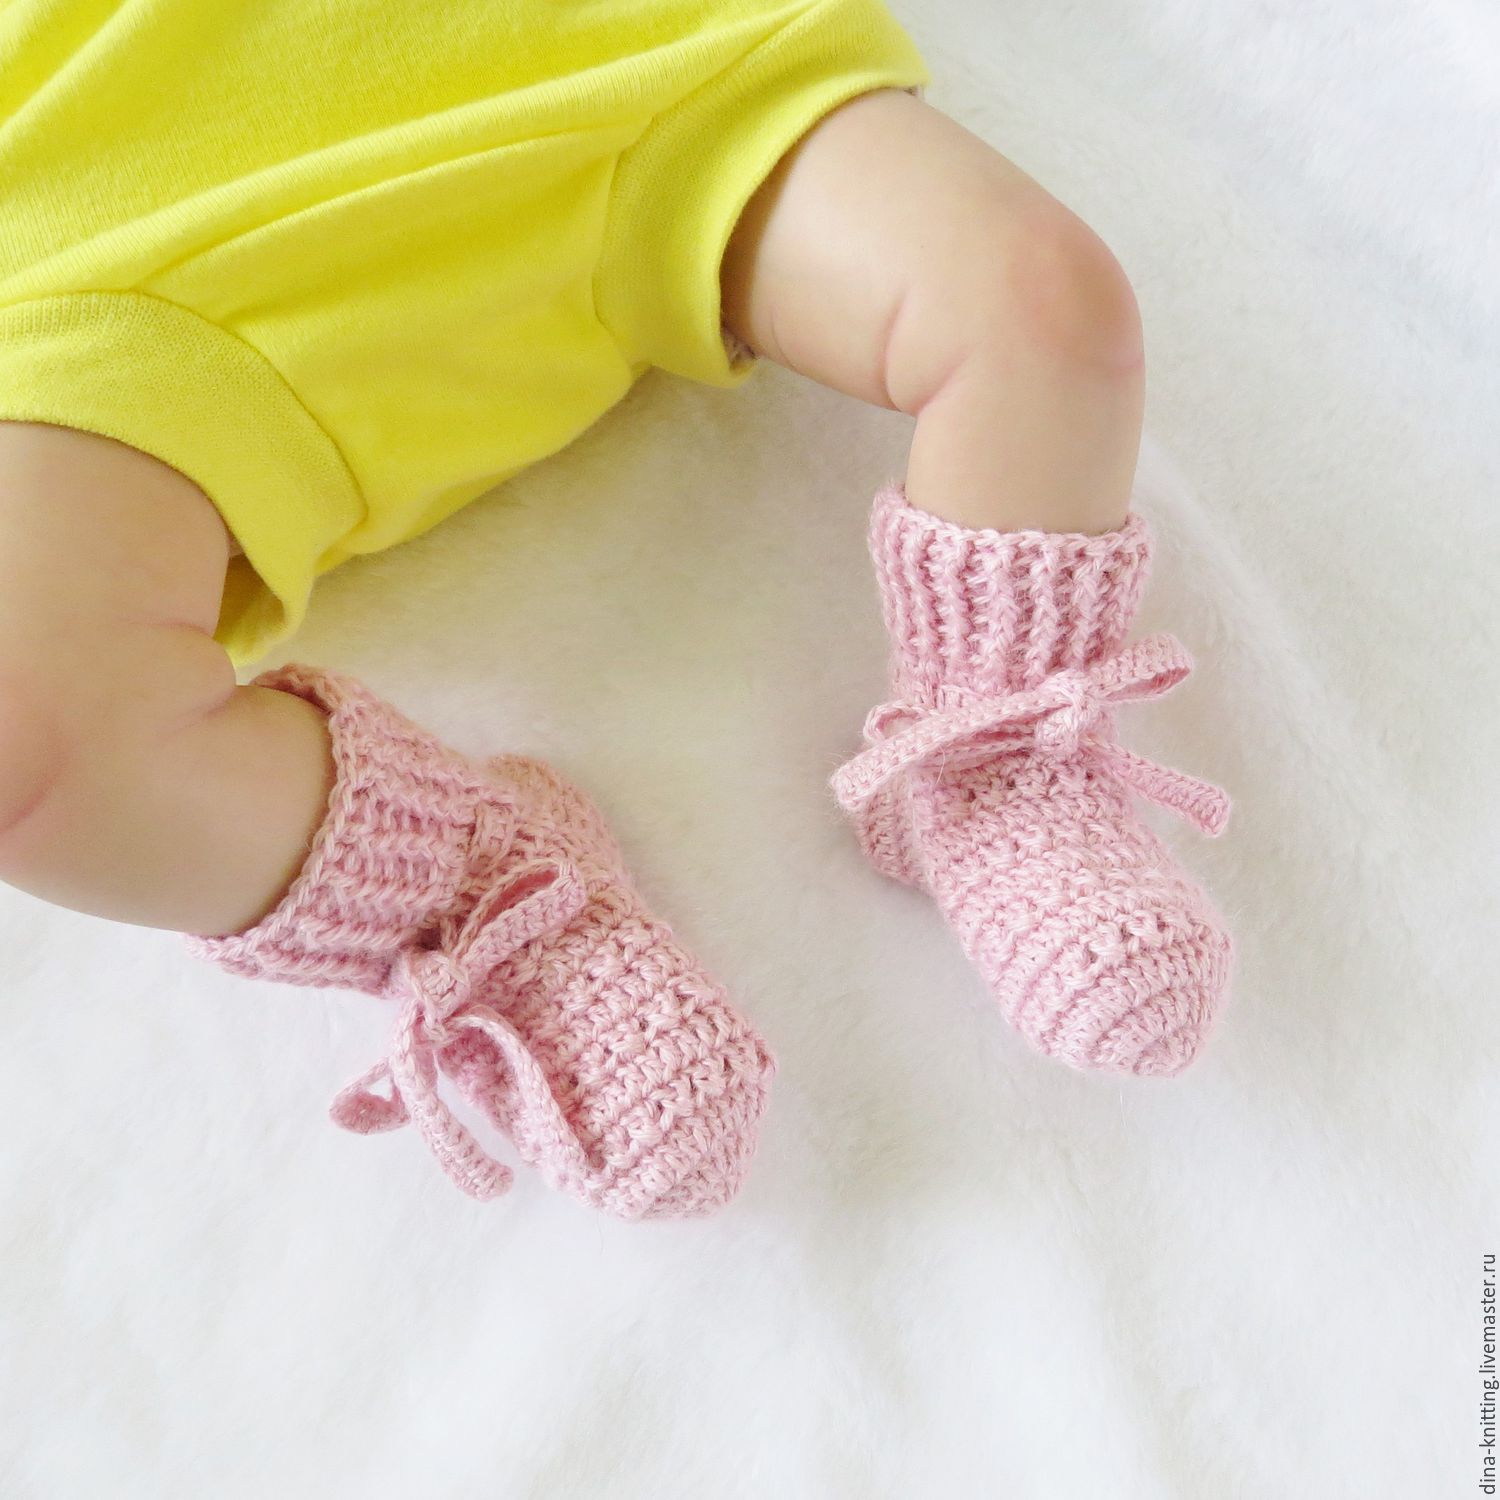 1 2 3 на носочки. Носочки для новорожденных спицами. Носочки трикотажные для новорожденных. Вязаные носочки для новорожденного. Вязаные носочки для младенцев.